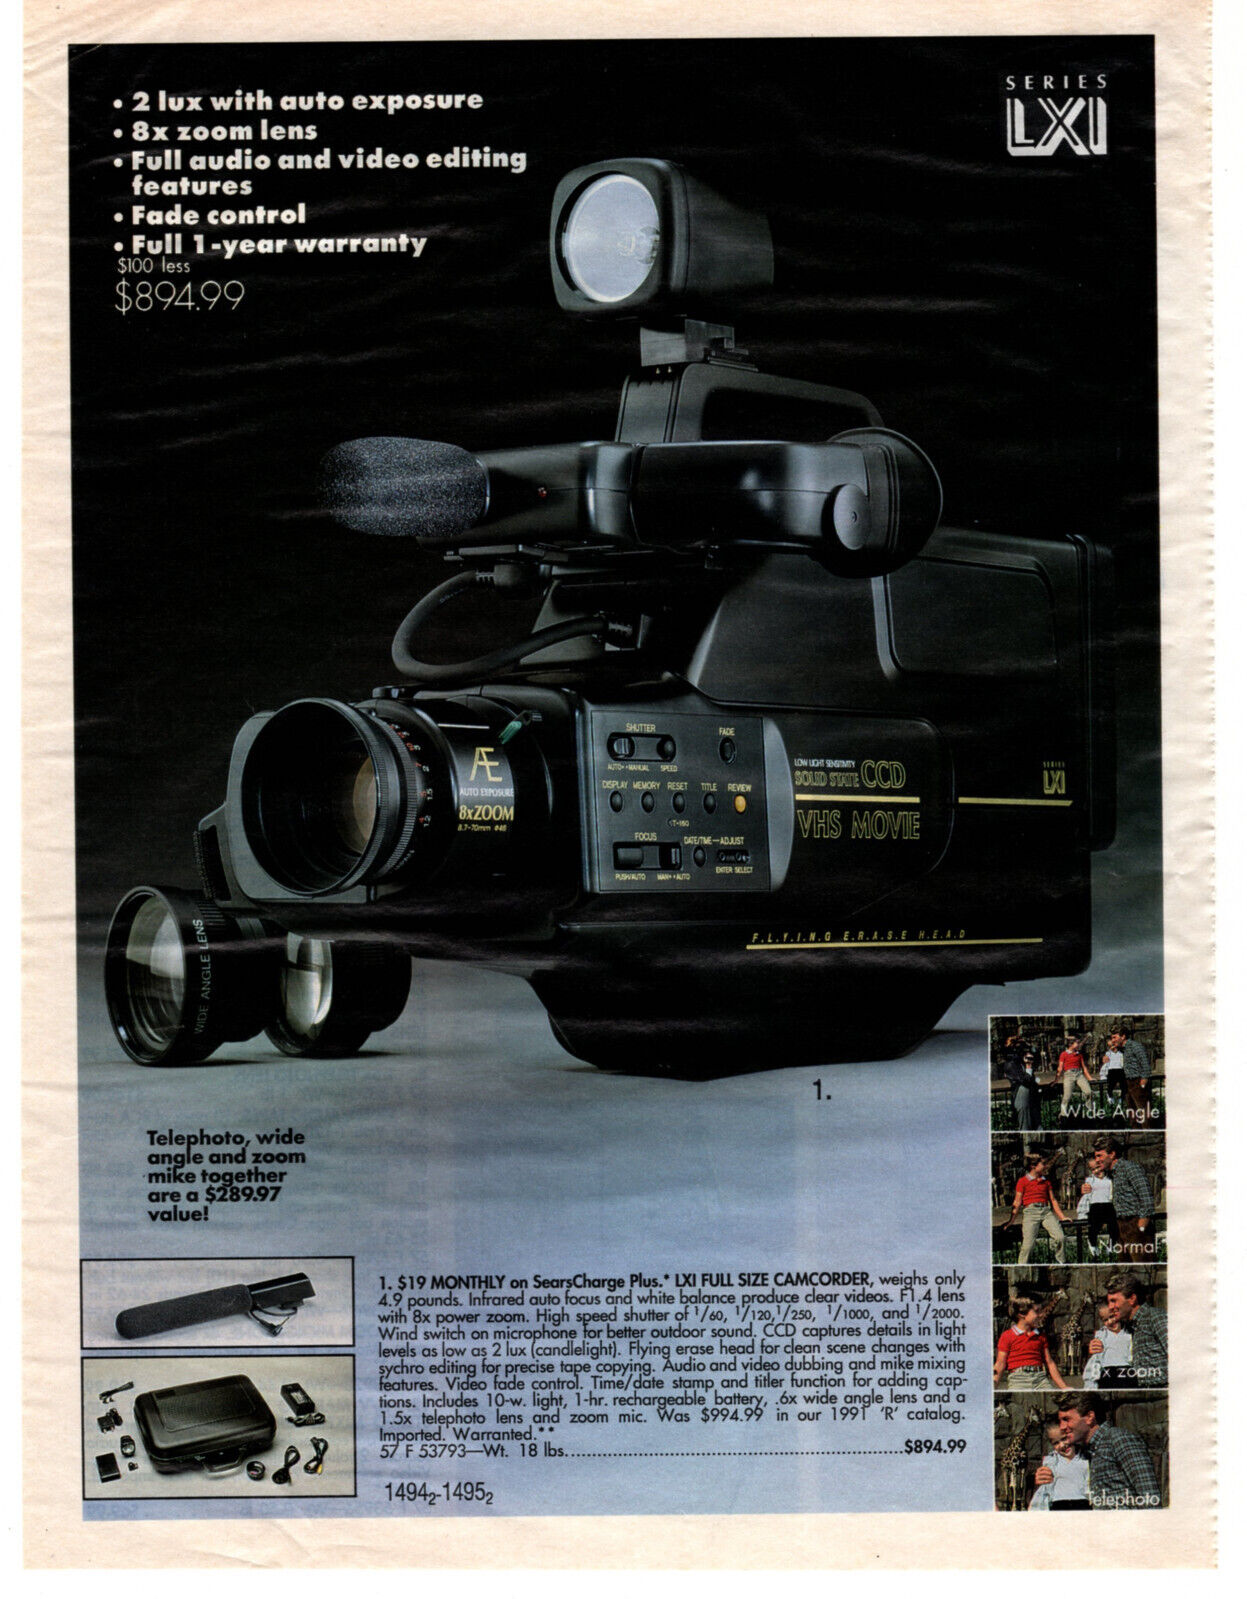 Sears LXI Camcorder Video Camera 1991 Vintage Print Ad Original Man Cave Decor